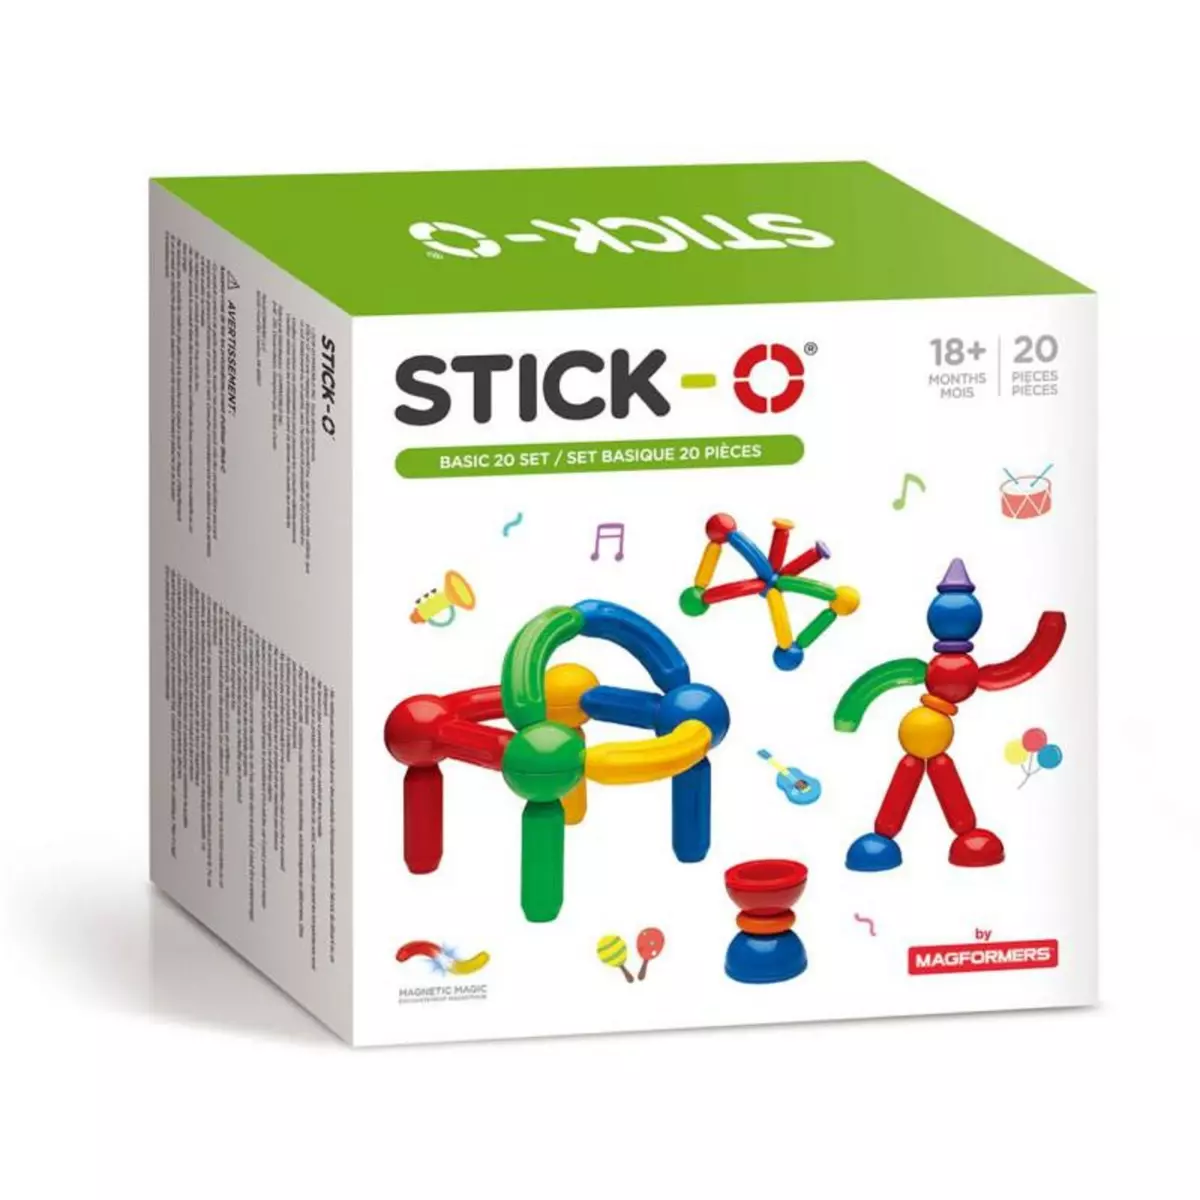 STICK-O Stick-O Basic set, 20 pcs.